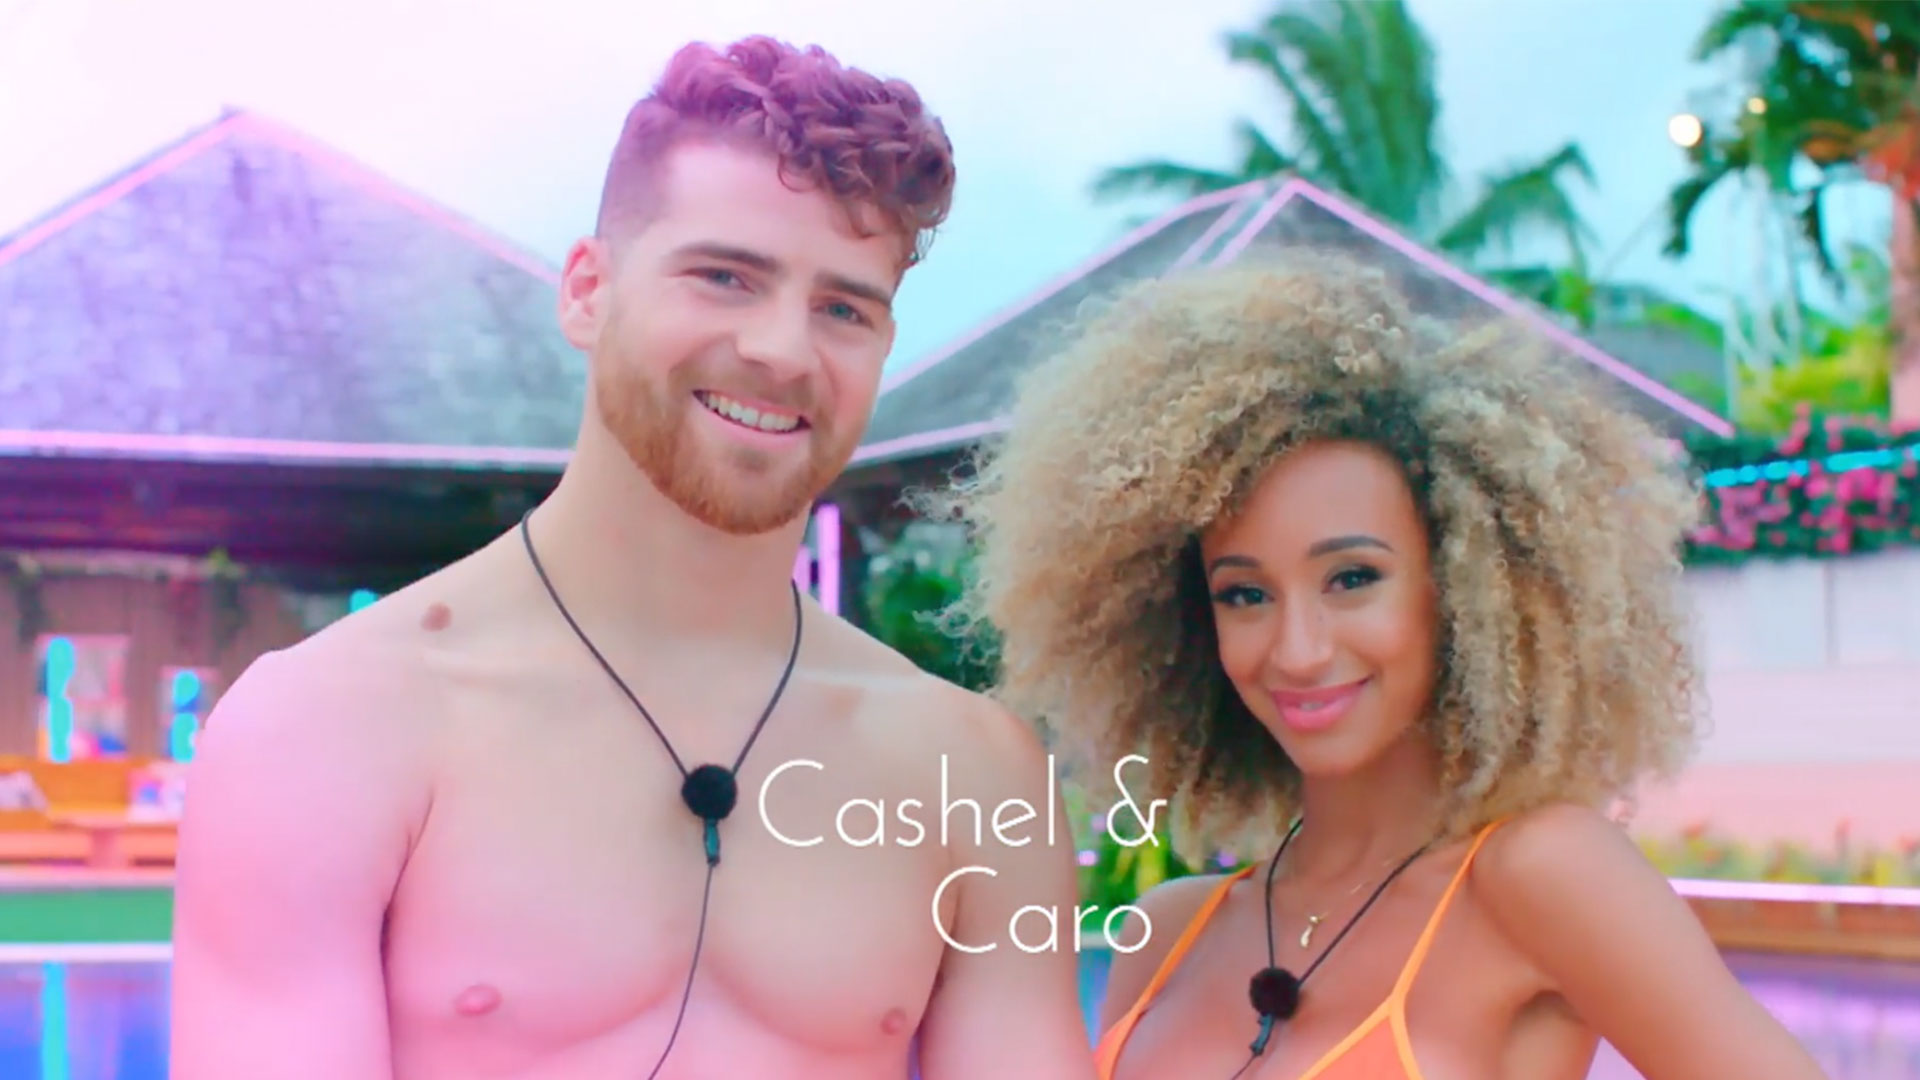 Cashel and Caro